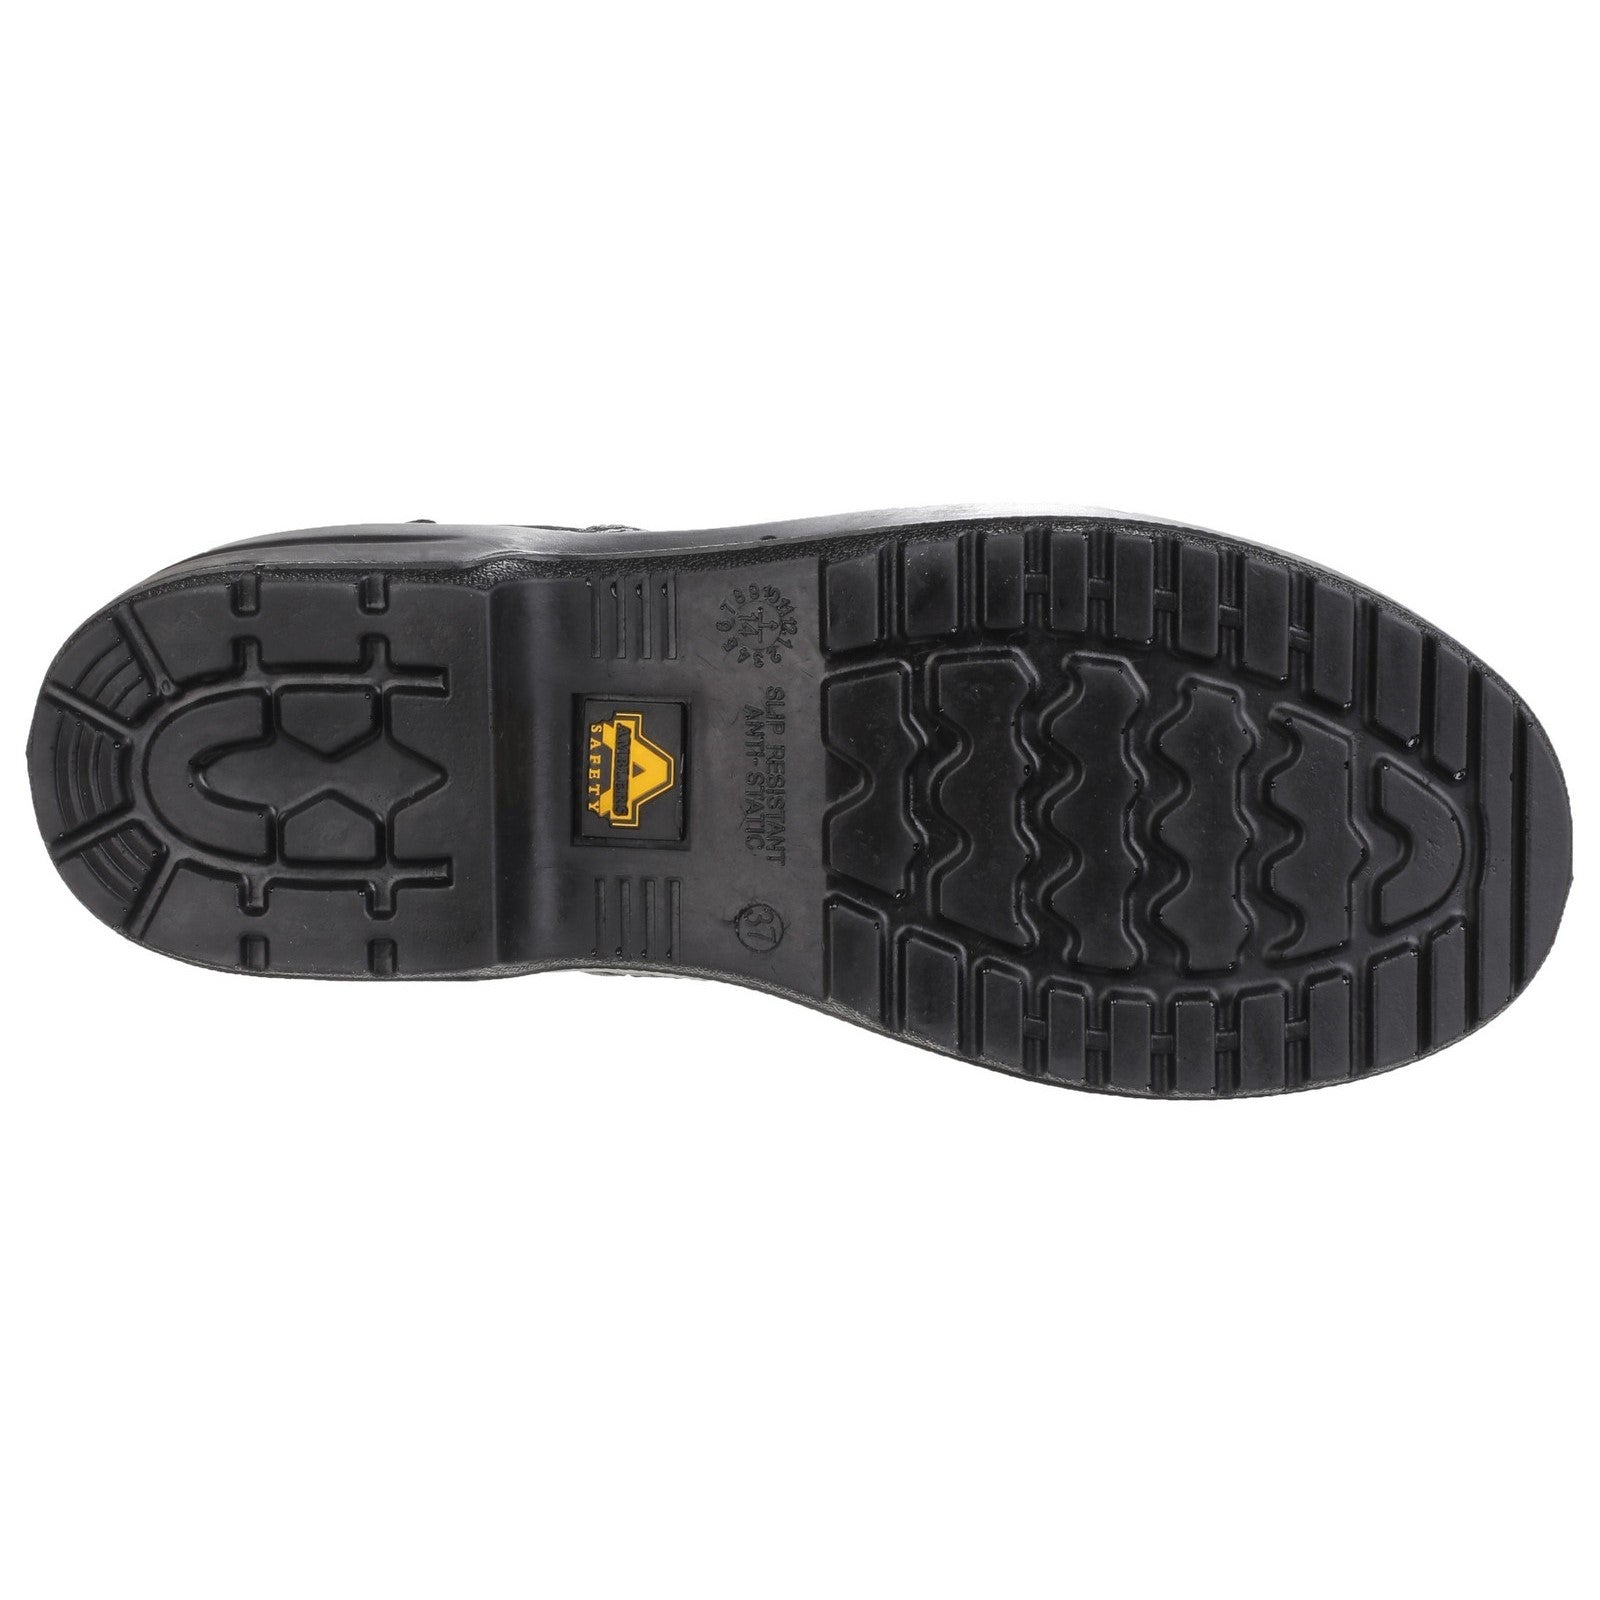 Amblers FS94C Lightweight Slip on Safety Shoe